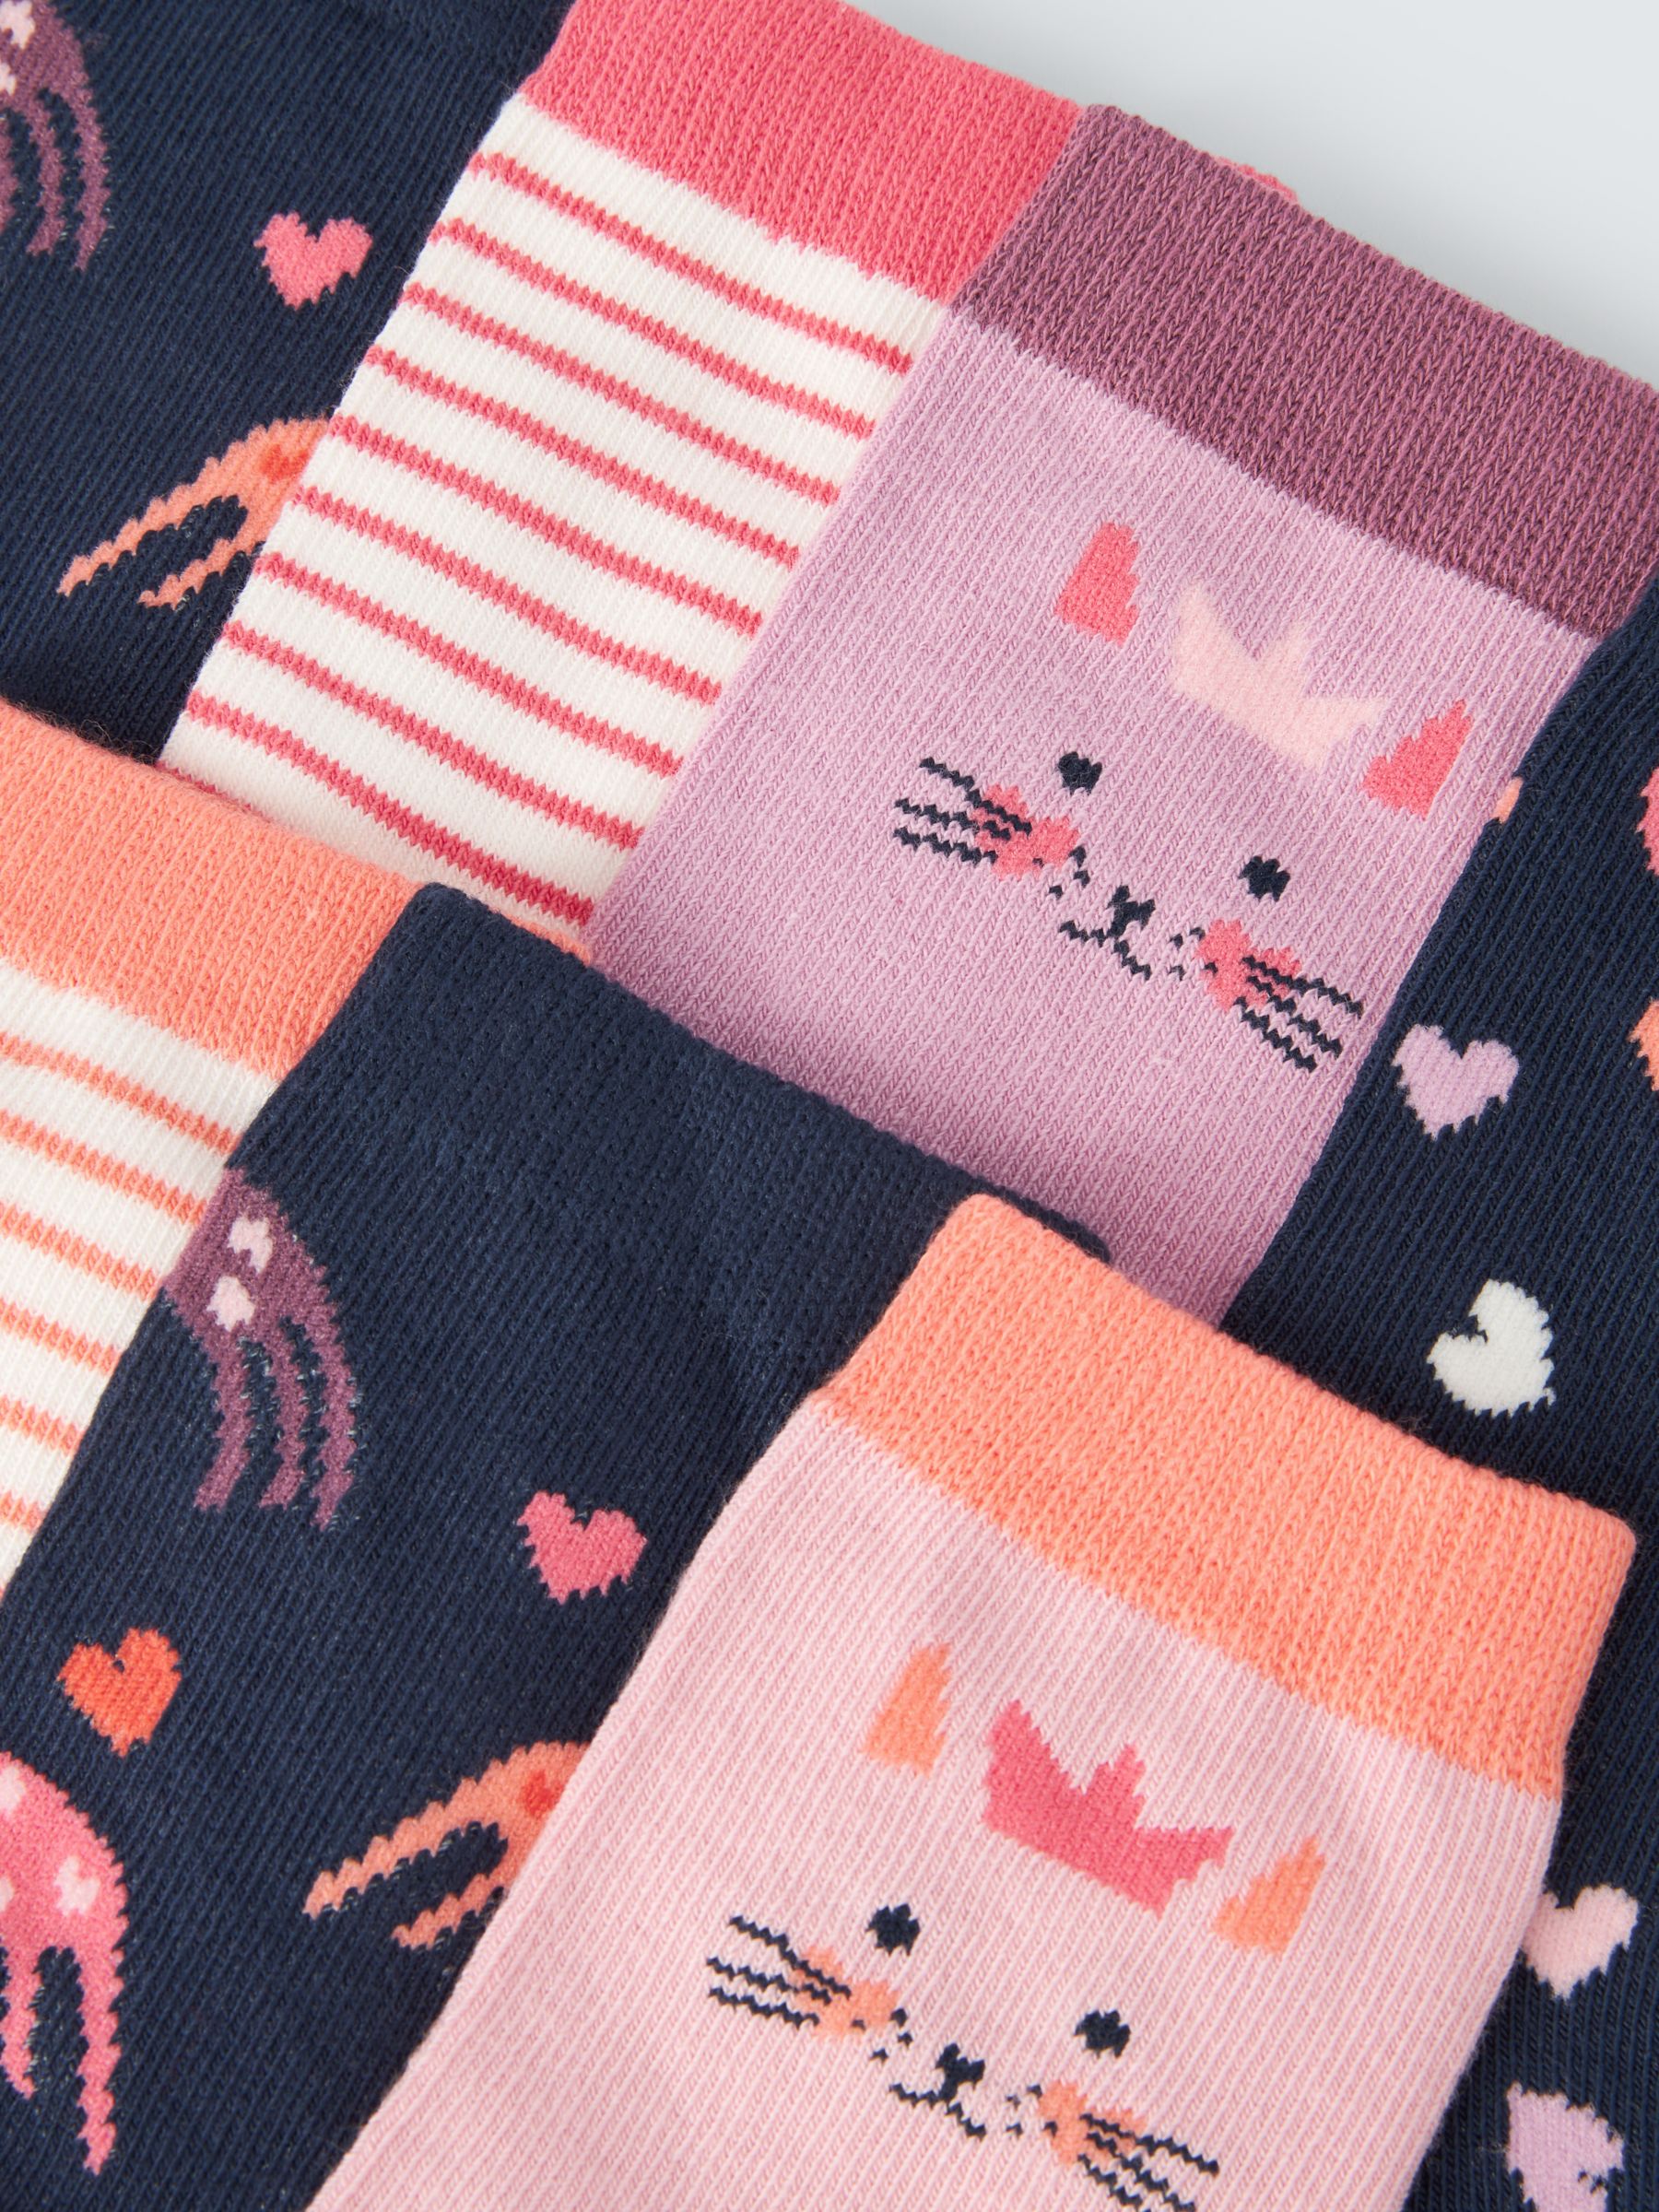 Buy John Lewis Kids' Cotton Rich Party Cat Stripe Socks, Pack of 7, Multi Online at johnlewis.com